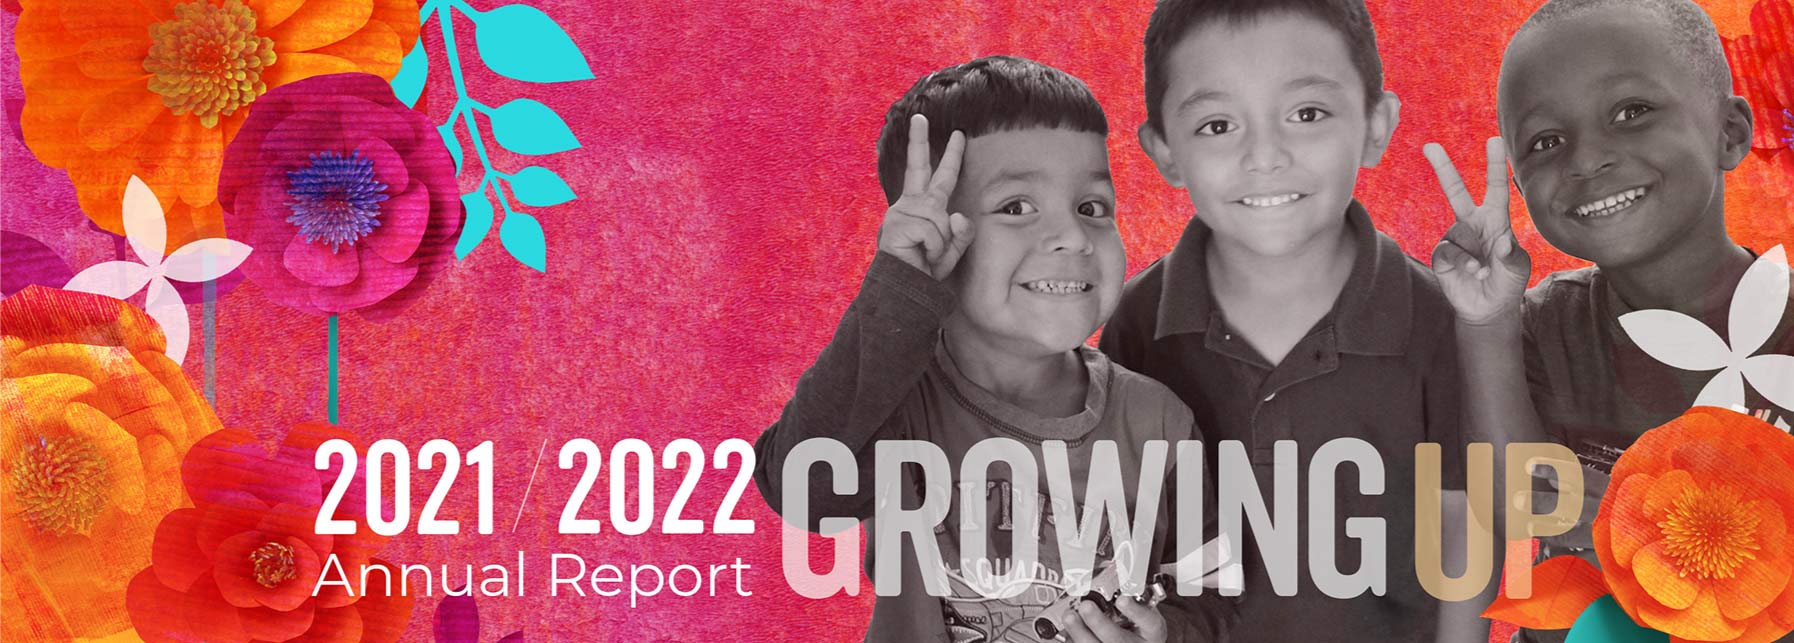 Annual report 2020 - 2021